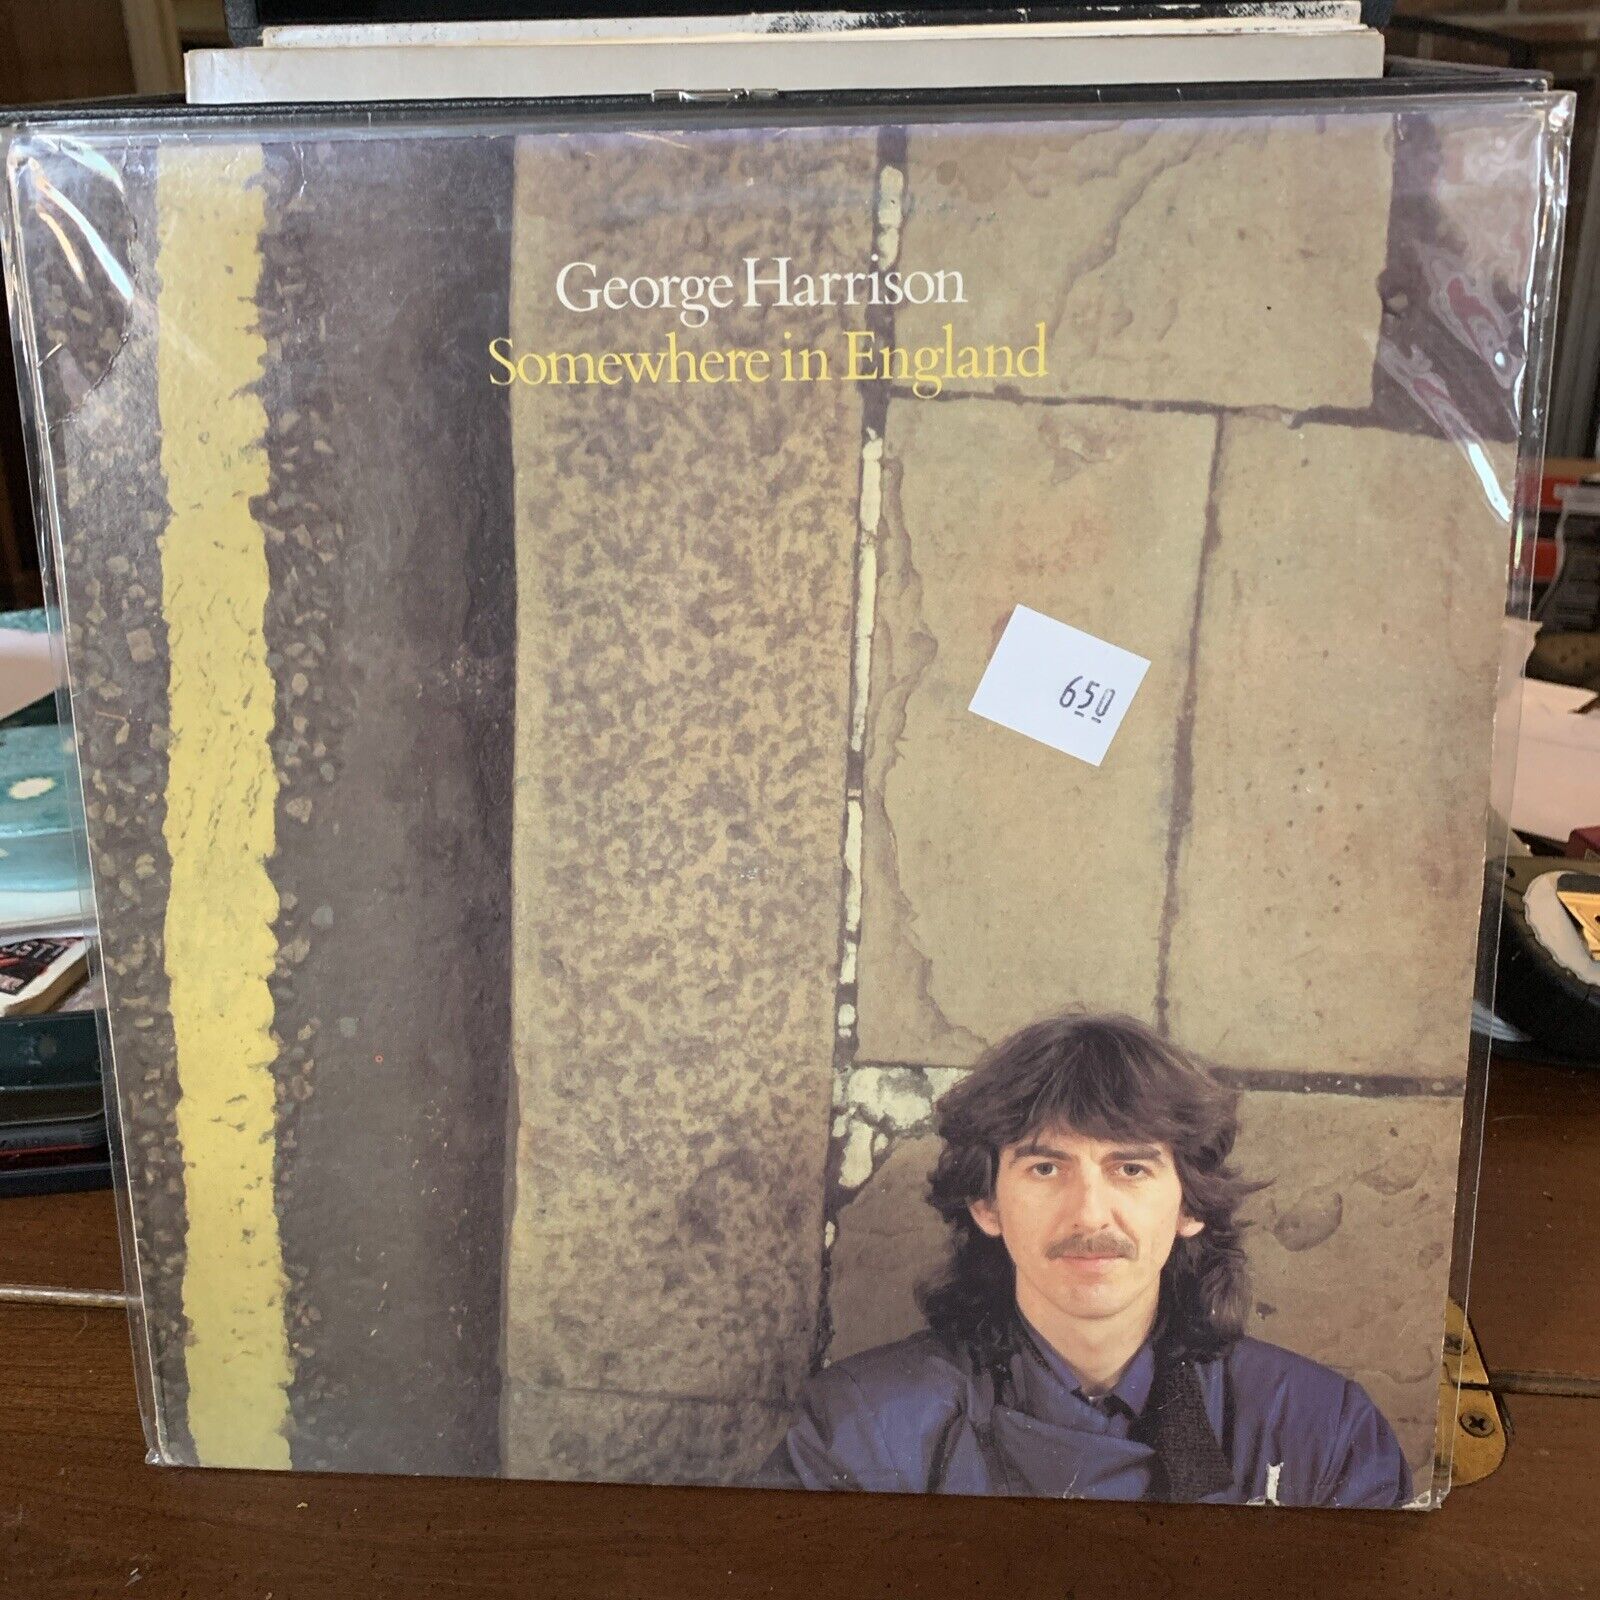 GEORGE HARRISON  - SOMEWHERE IN ENGLAND  - VINYL  RECORD  - BEATLES  - VG+ 2